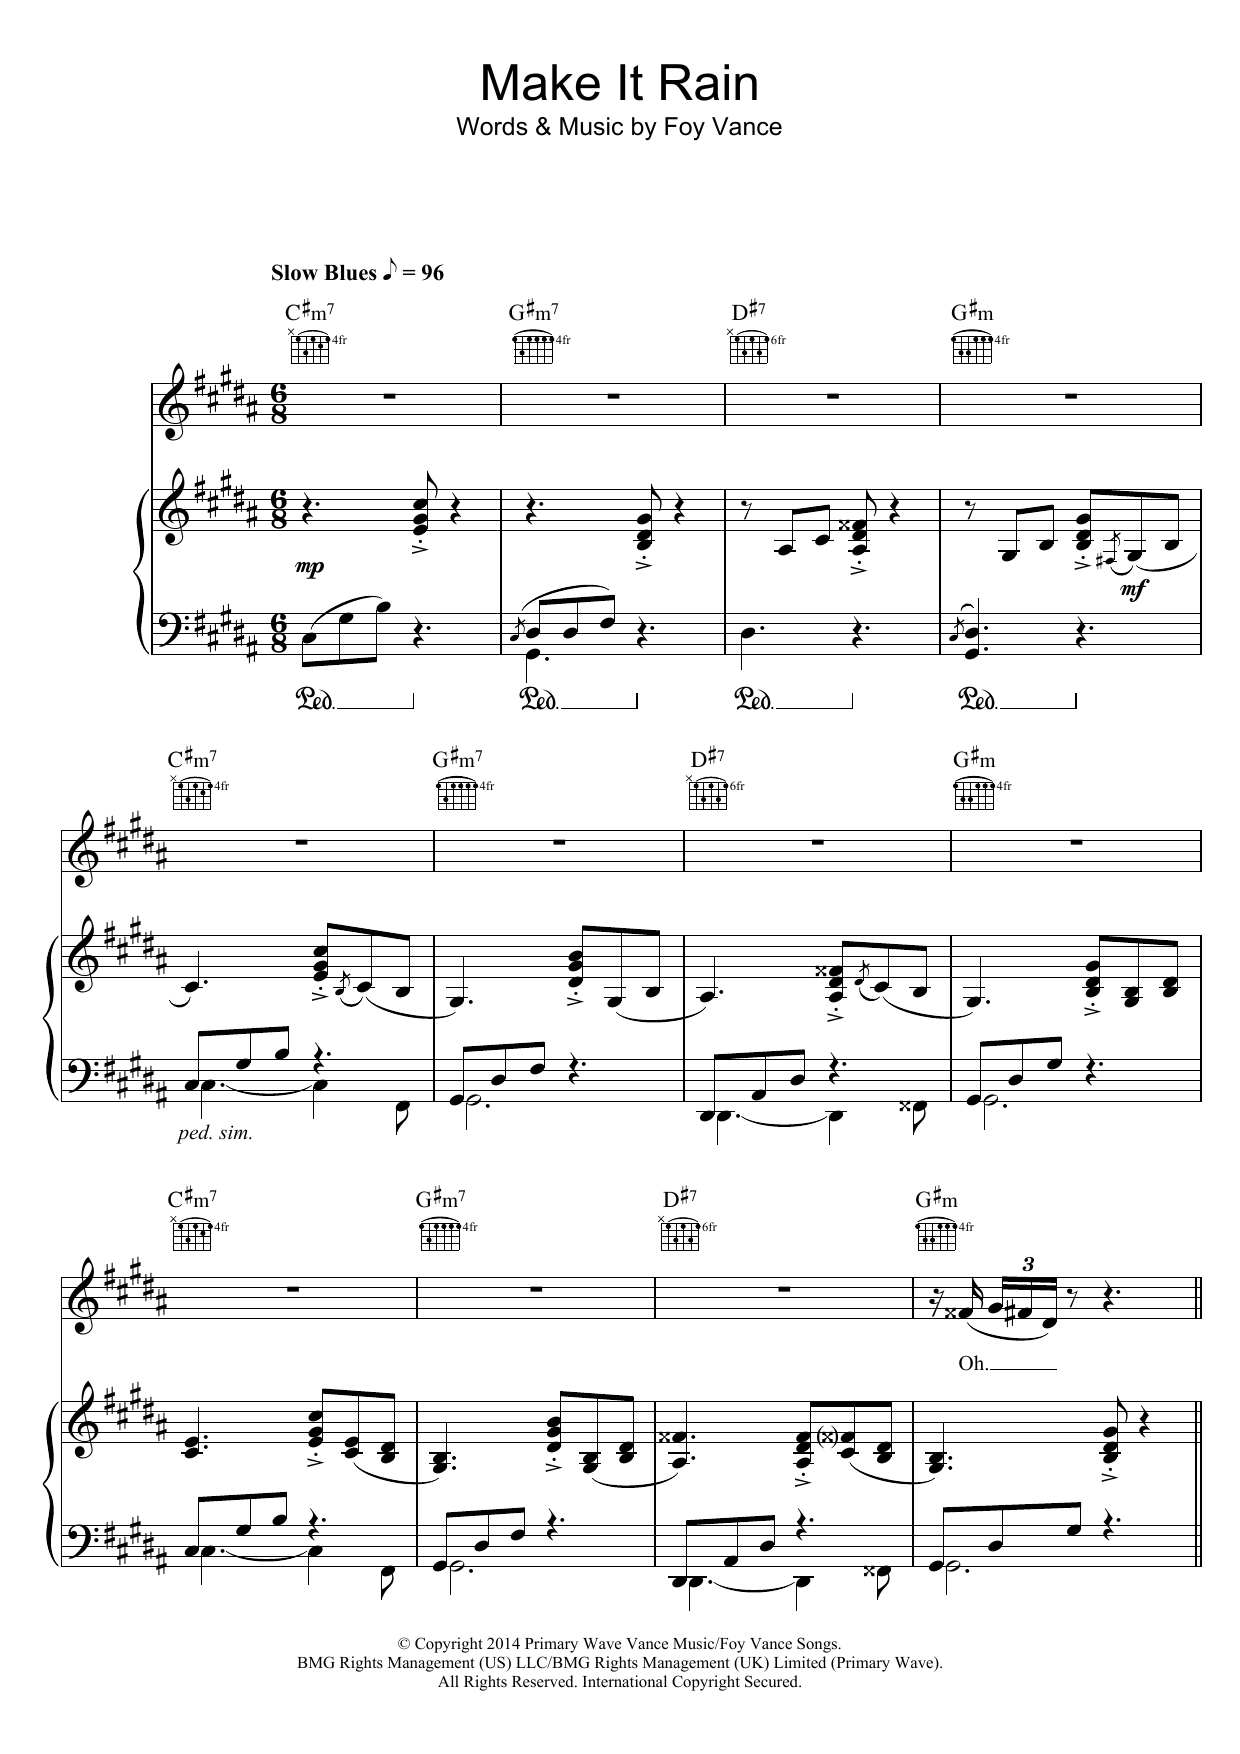 Ed Sheeran Make It Rain Sheet Music Notes & Chords for Guitar Tab Play-Along - Download or Print PDF